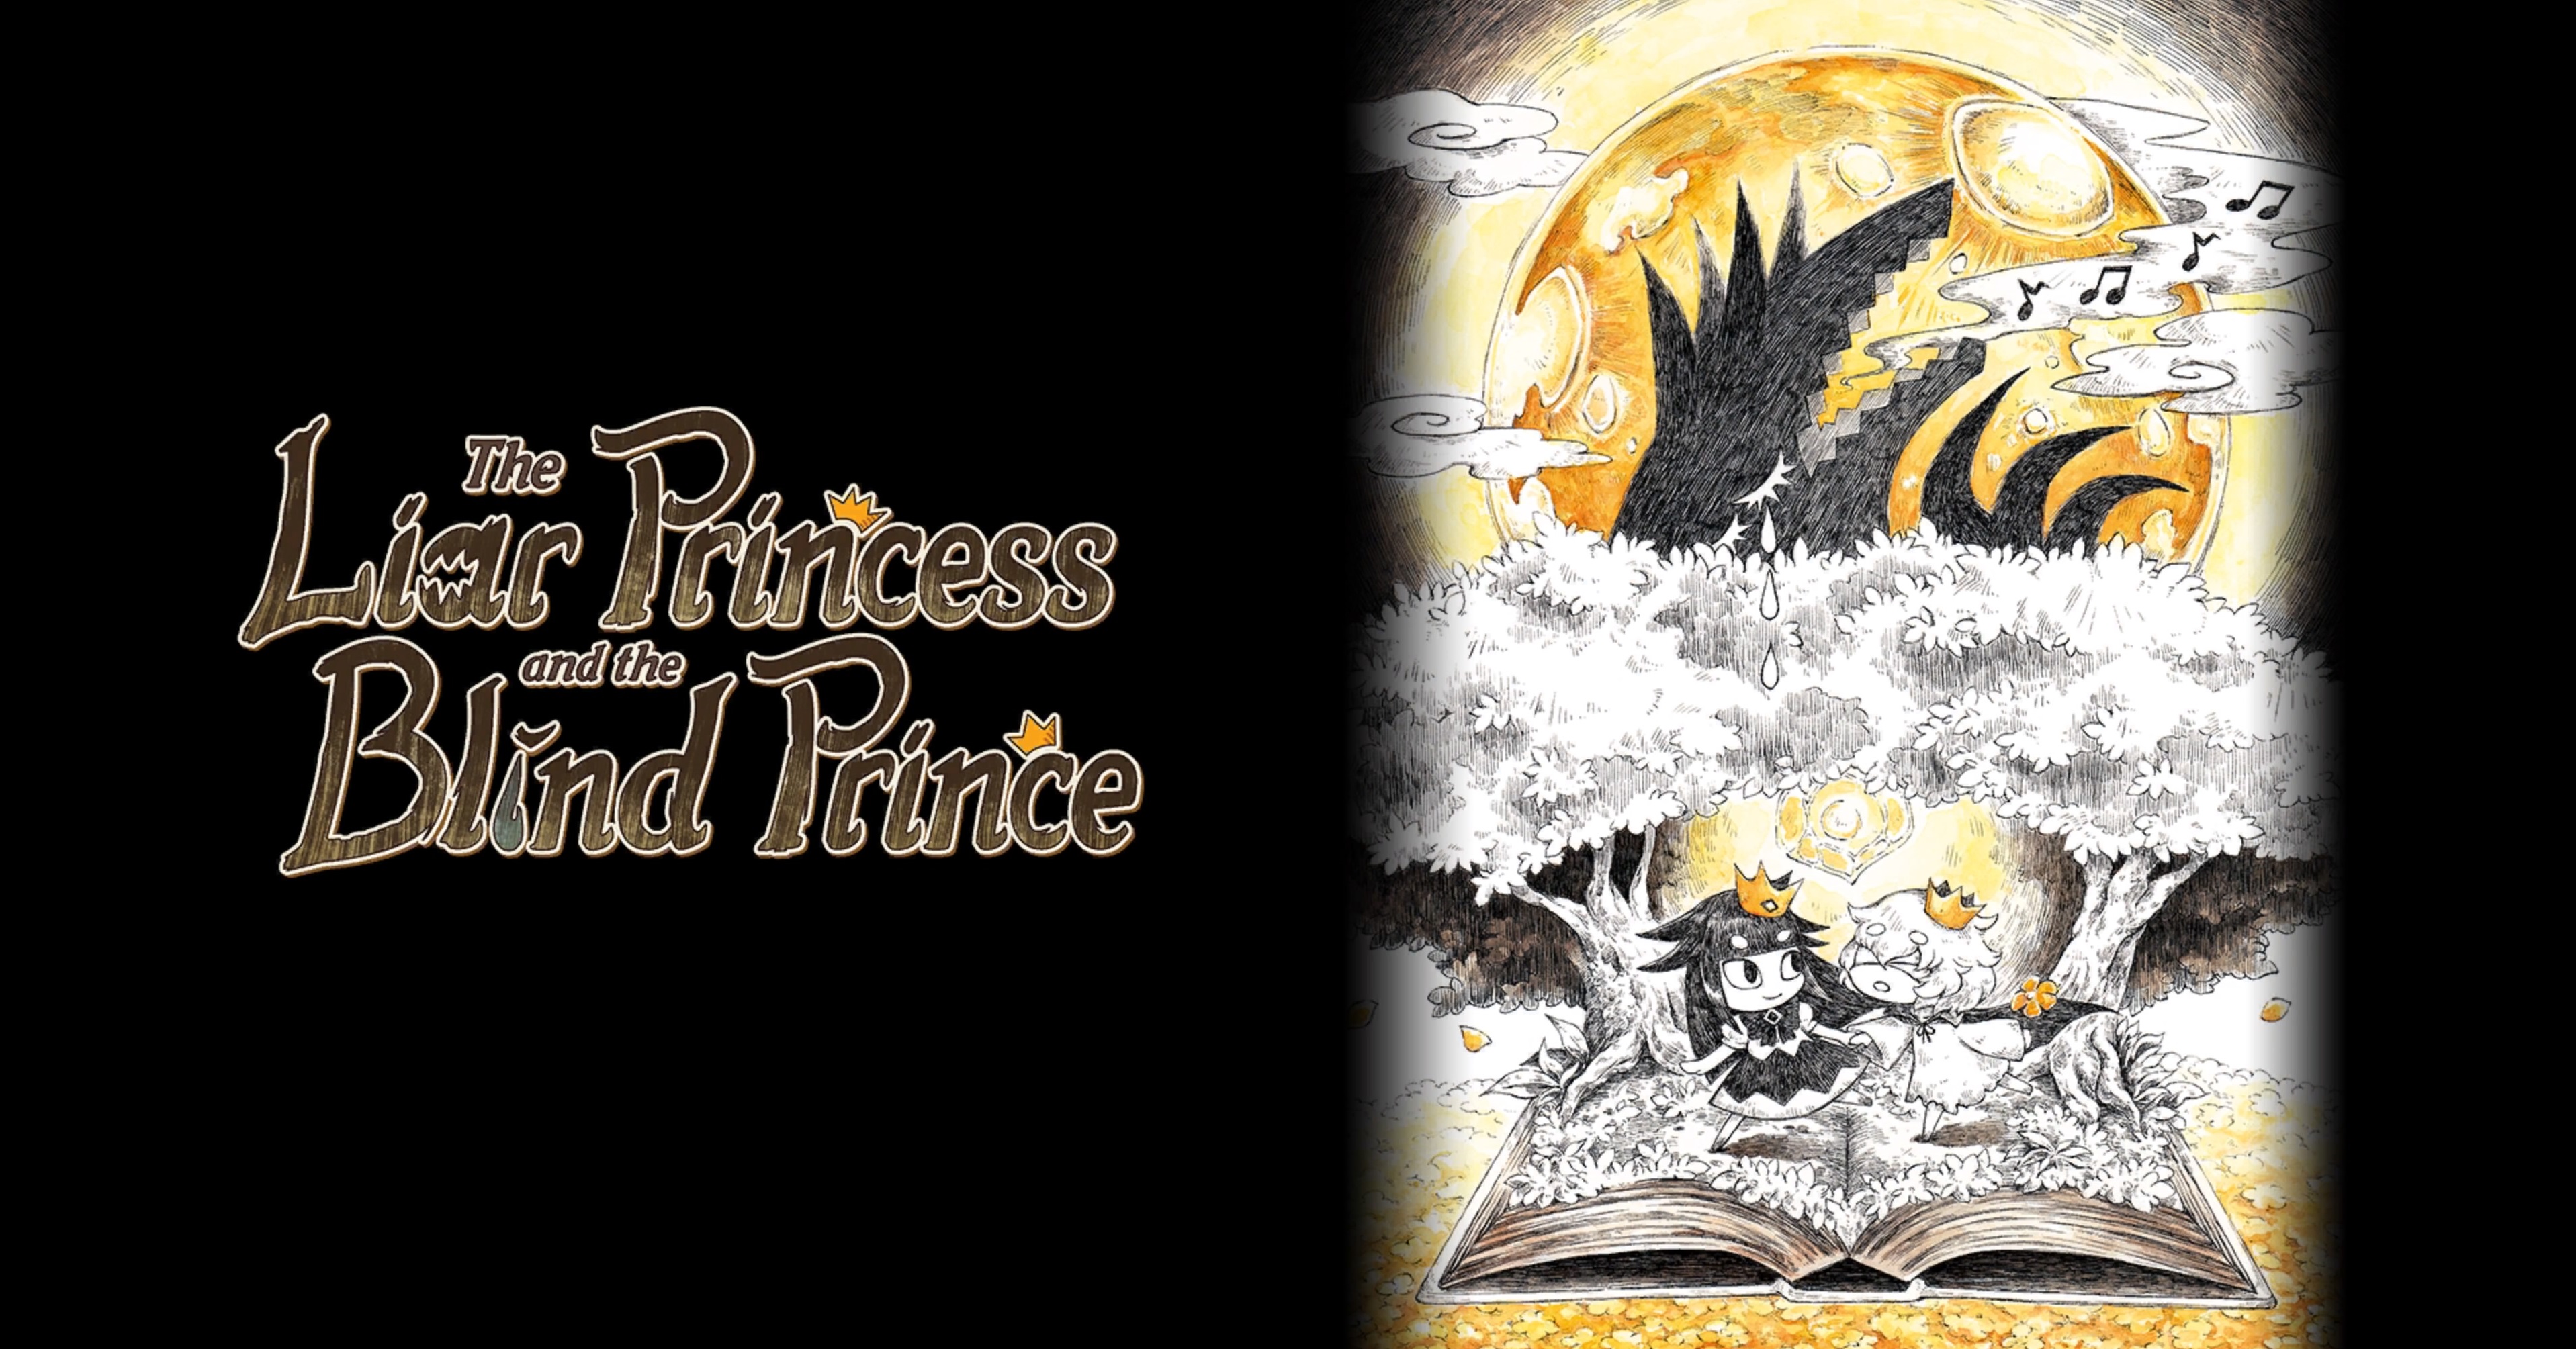 The Liar Princess And Blind Prince confirmado para PS4, PS Vita e